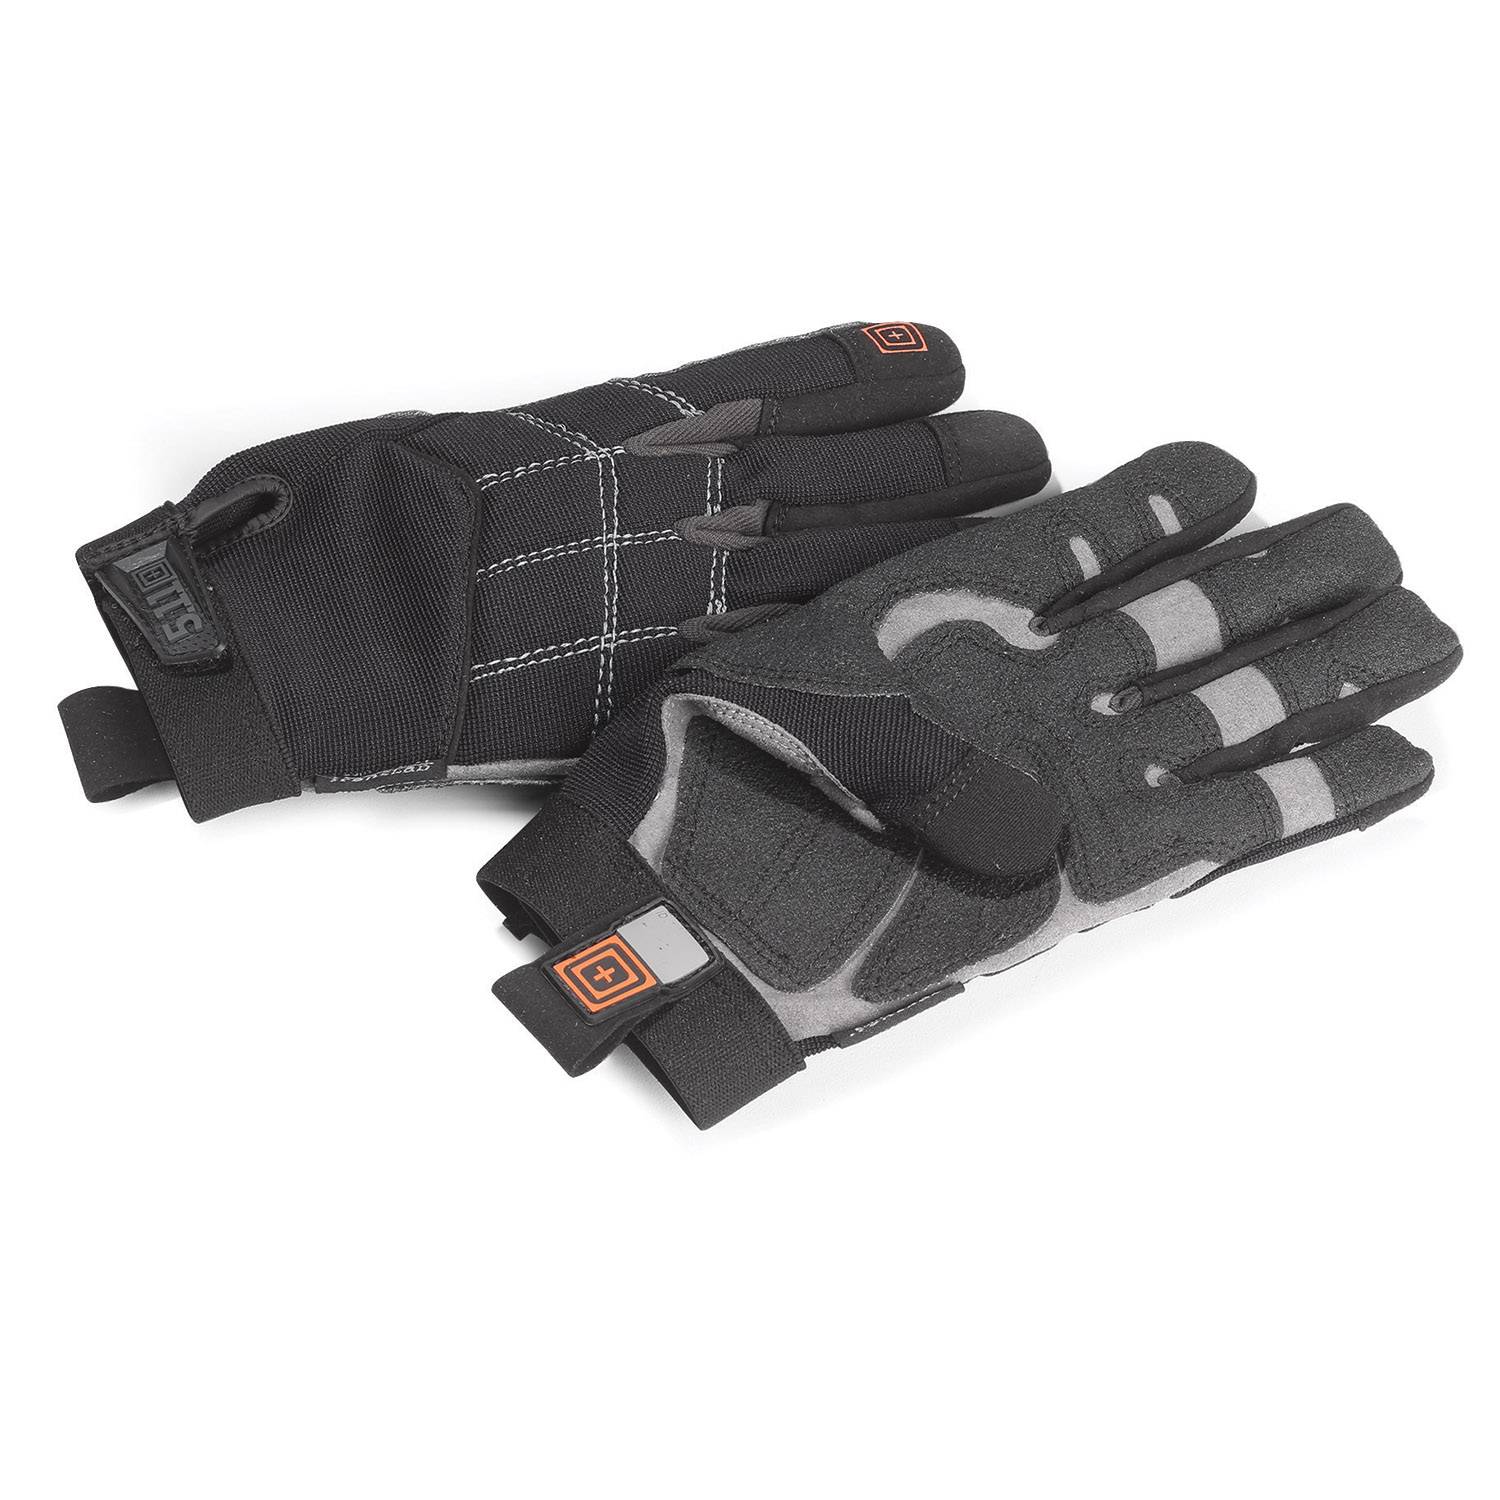 5.11 Men's Station Grip Nylon/Leather Lightweight Tactical Gloves 59351 